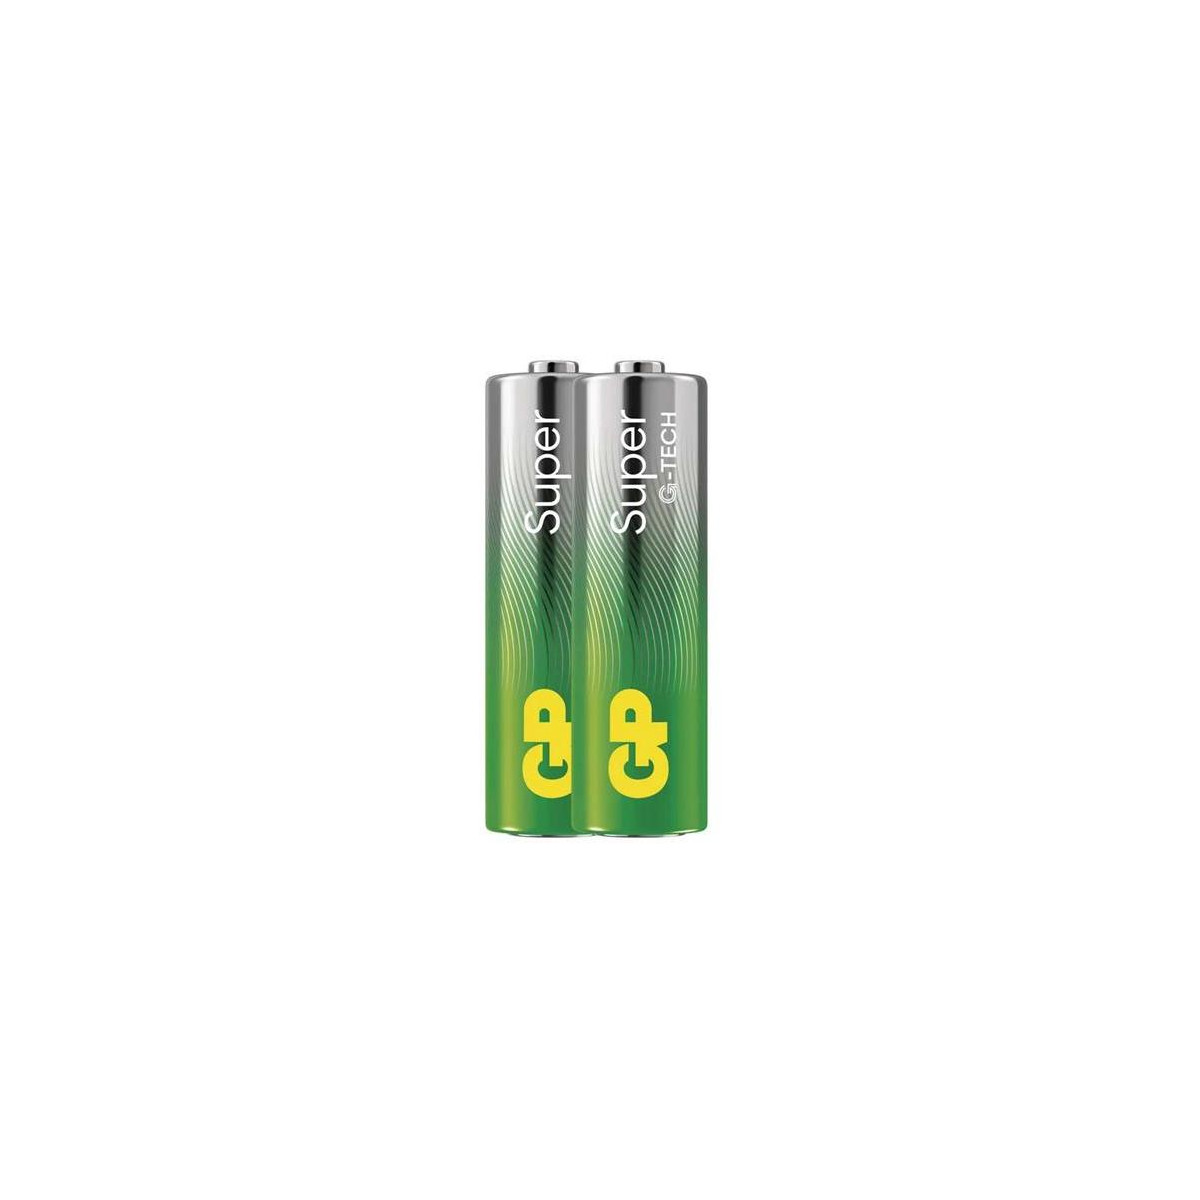 More about Baterie AA (R6) alkalická GP Super 2ks